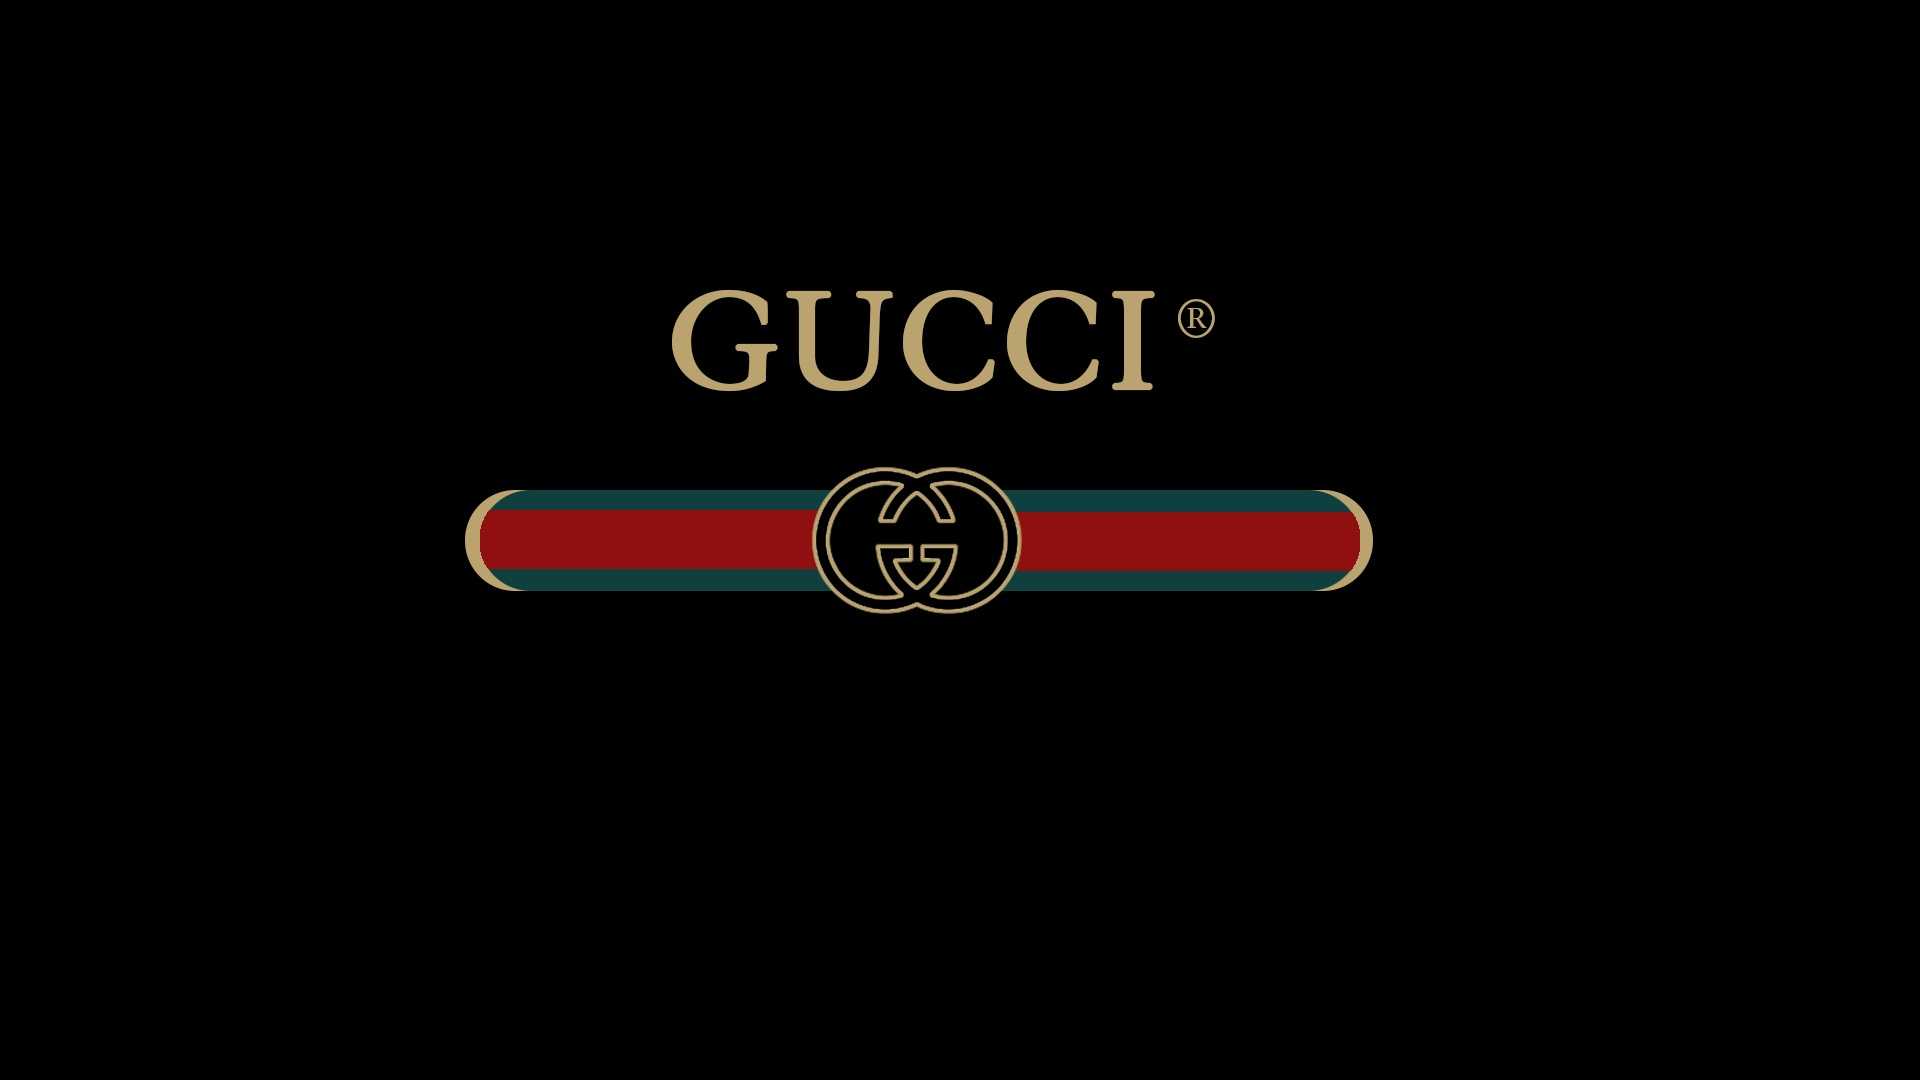 Gucci Dektop Wallpaper - KoLPaPer - Awesome Free HD Wallpapers